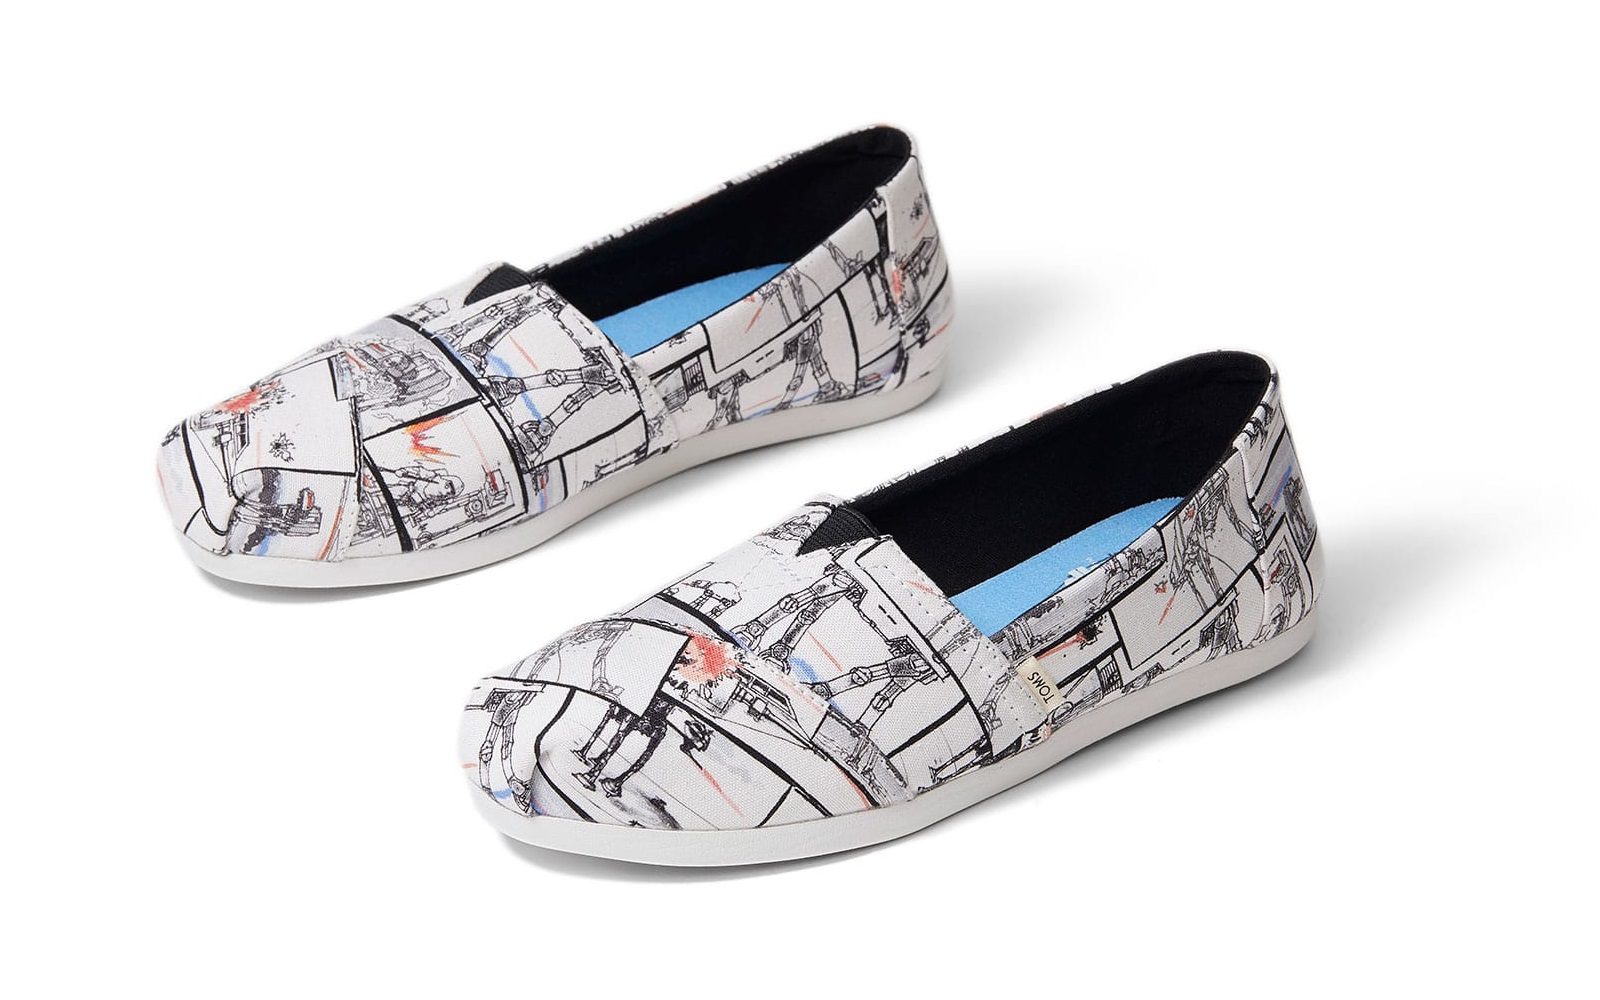 Toms x Star Wars Summer Footwear Collection 2019